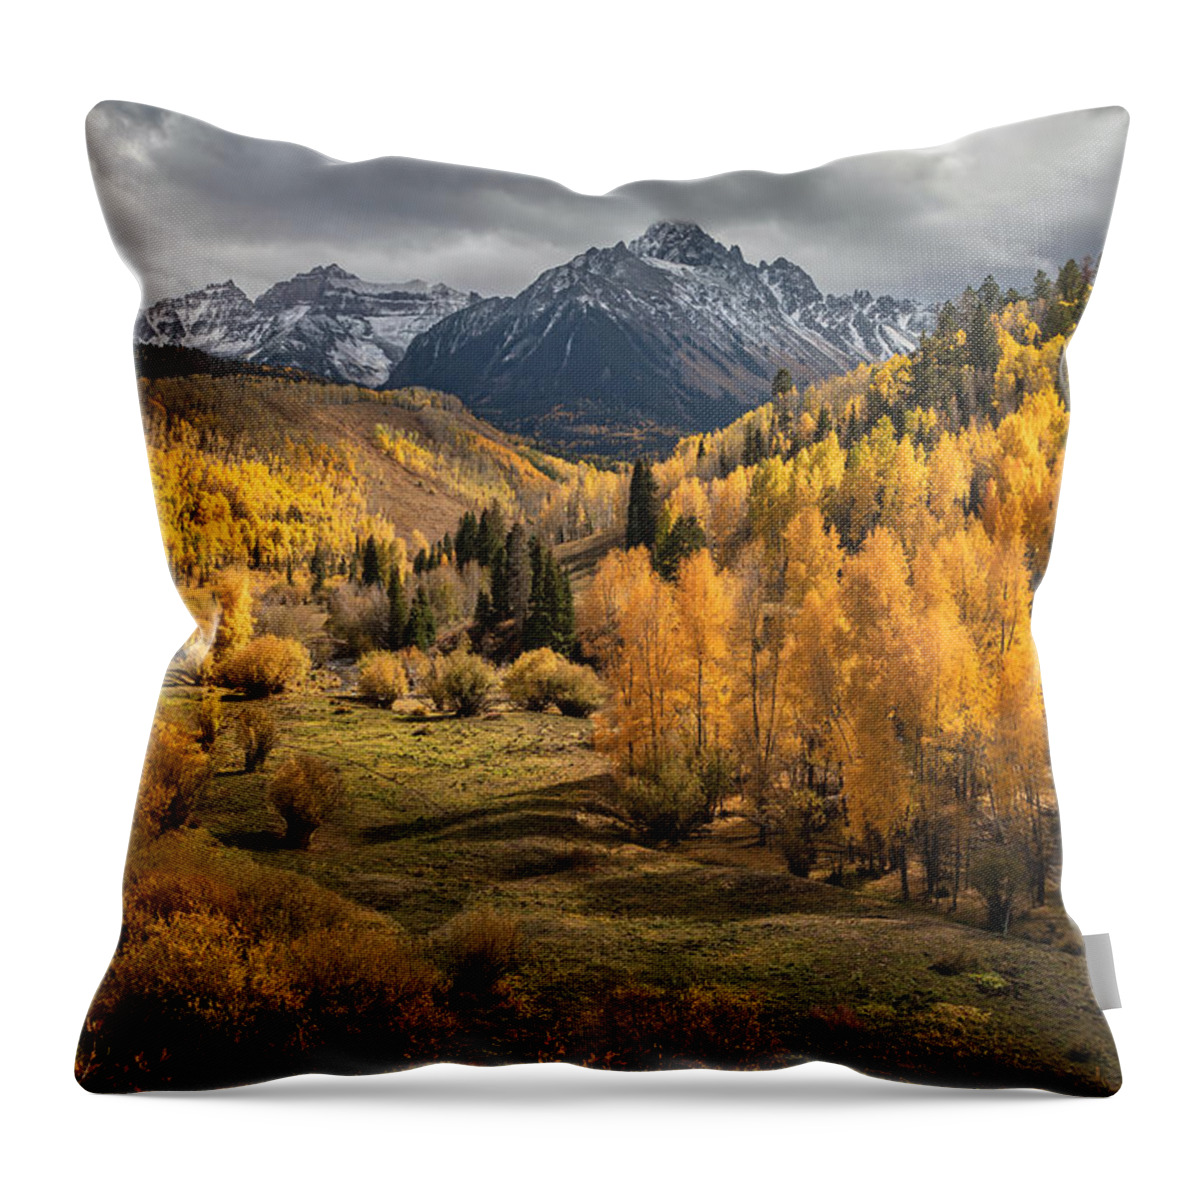 Colorado Throw Pillow featuring the photograph Autumn Glow by Ryan Smith